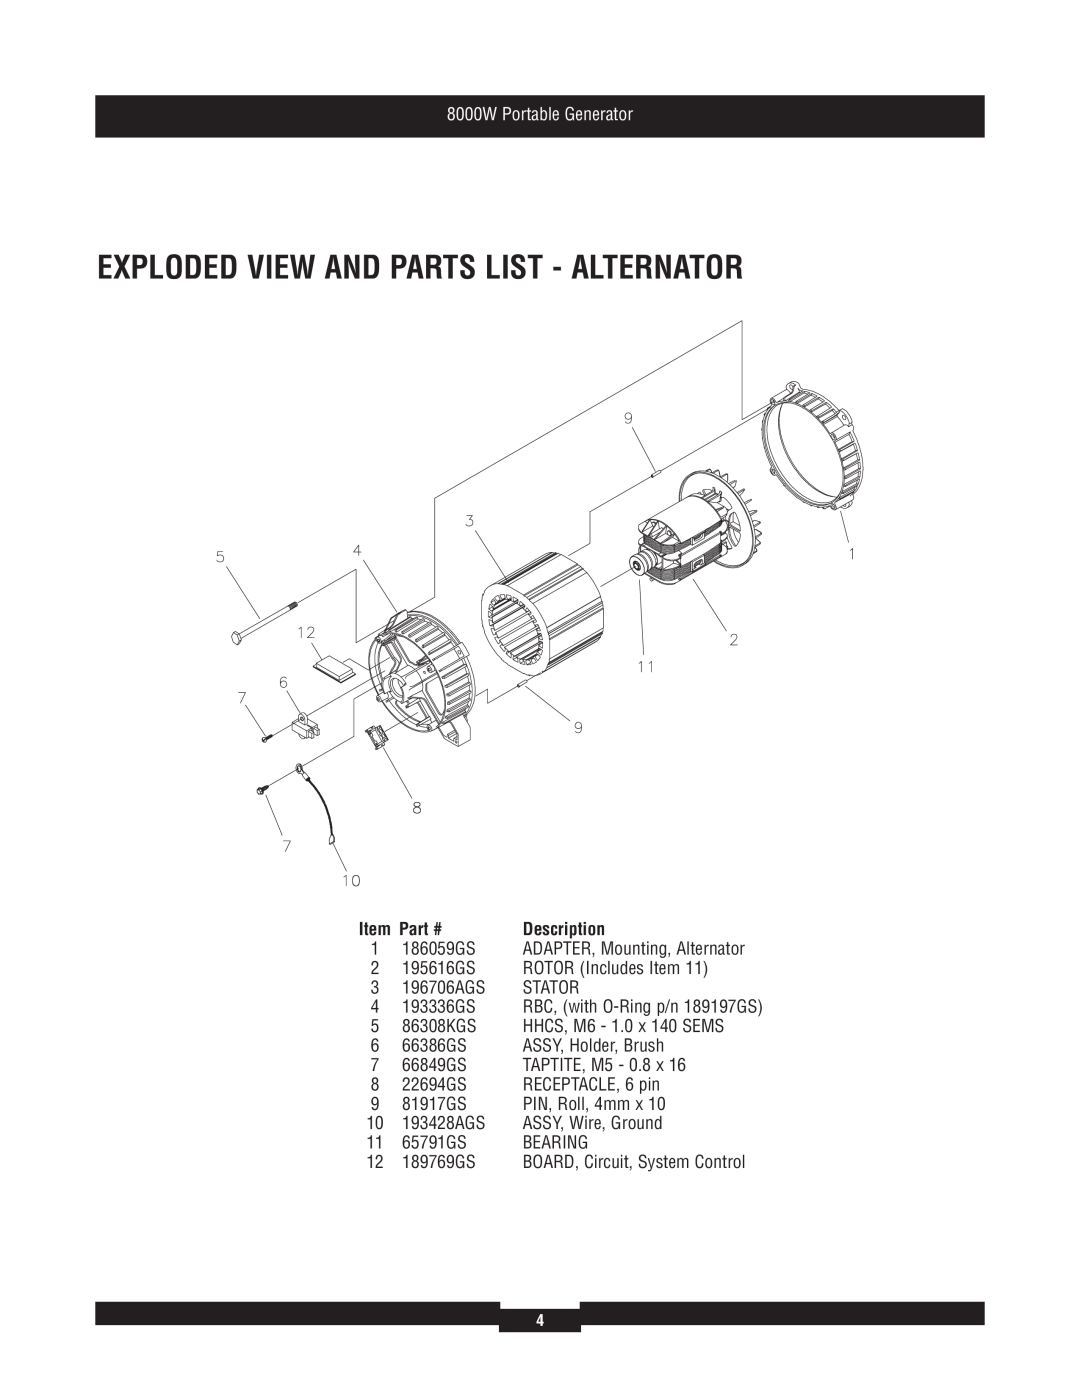 Briggs & Stratton 030385 Exploded View And Parts List - Alternator, Description, 1 186059GS, 8000W Portable Generator 